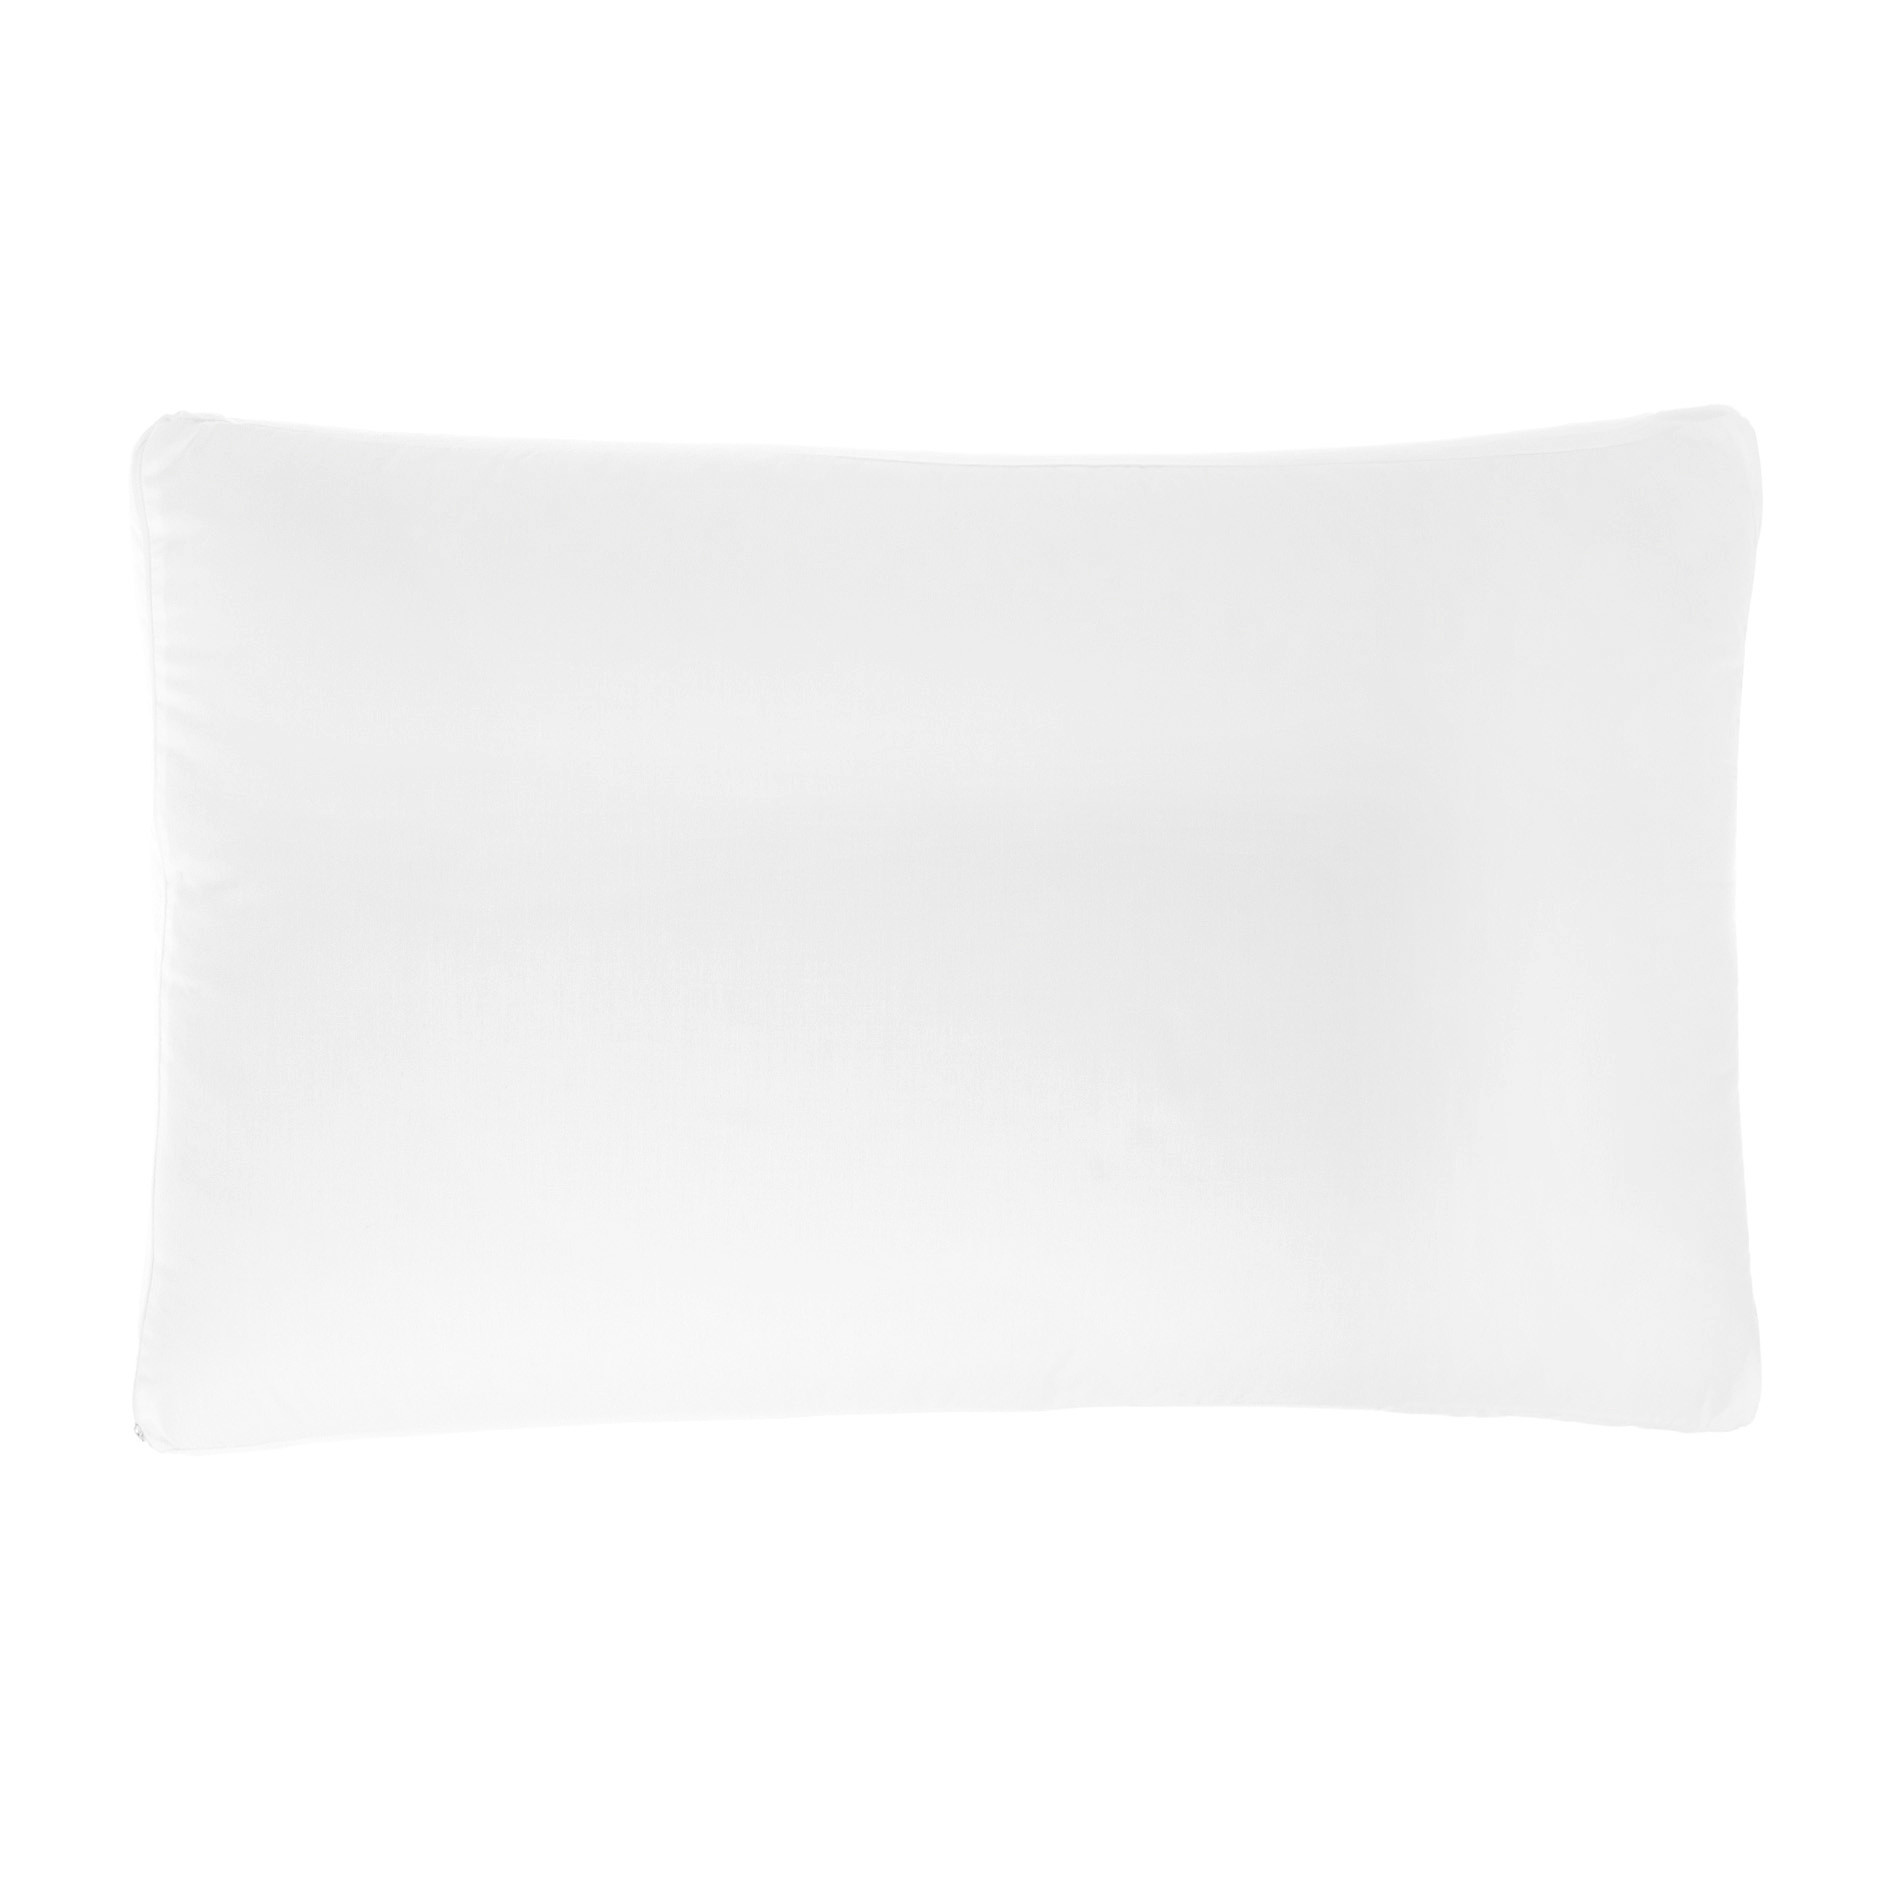 Anatomical pillow plus, White, large image number 0